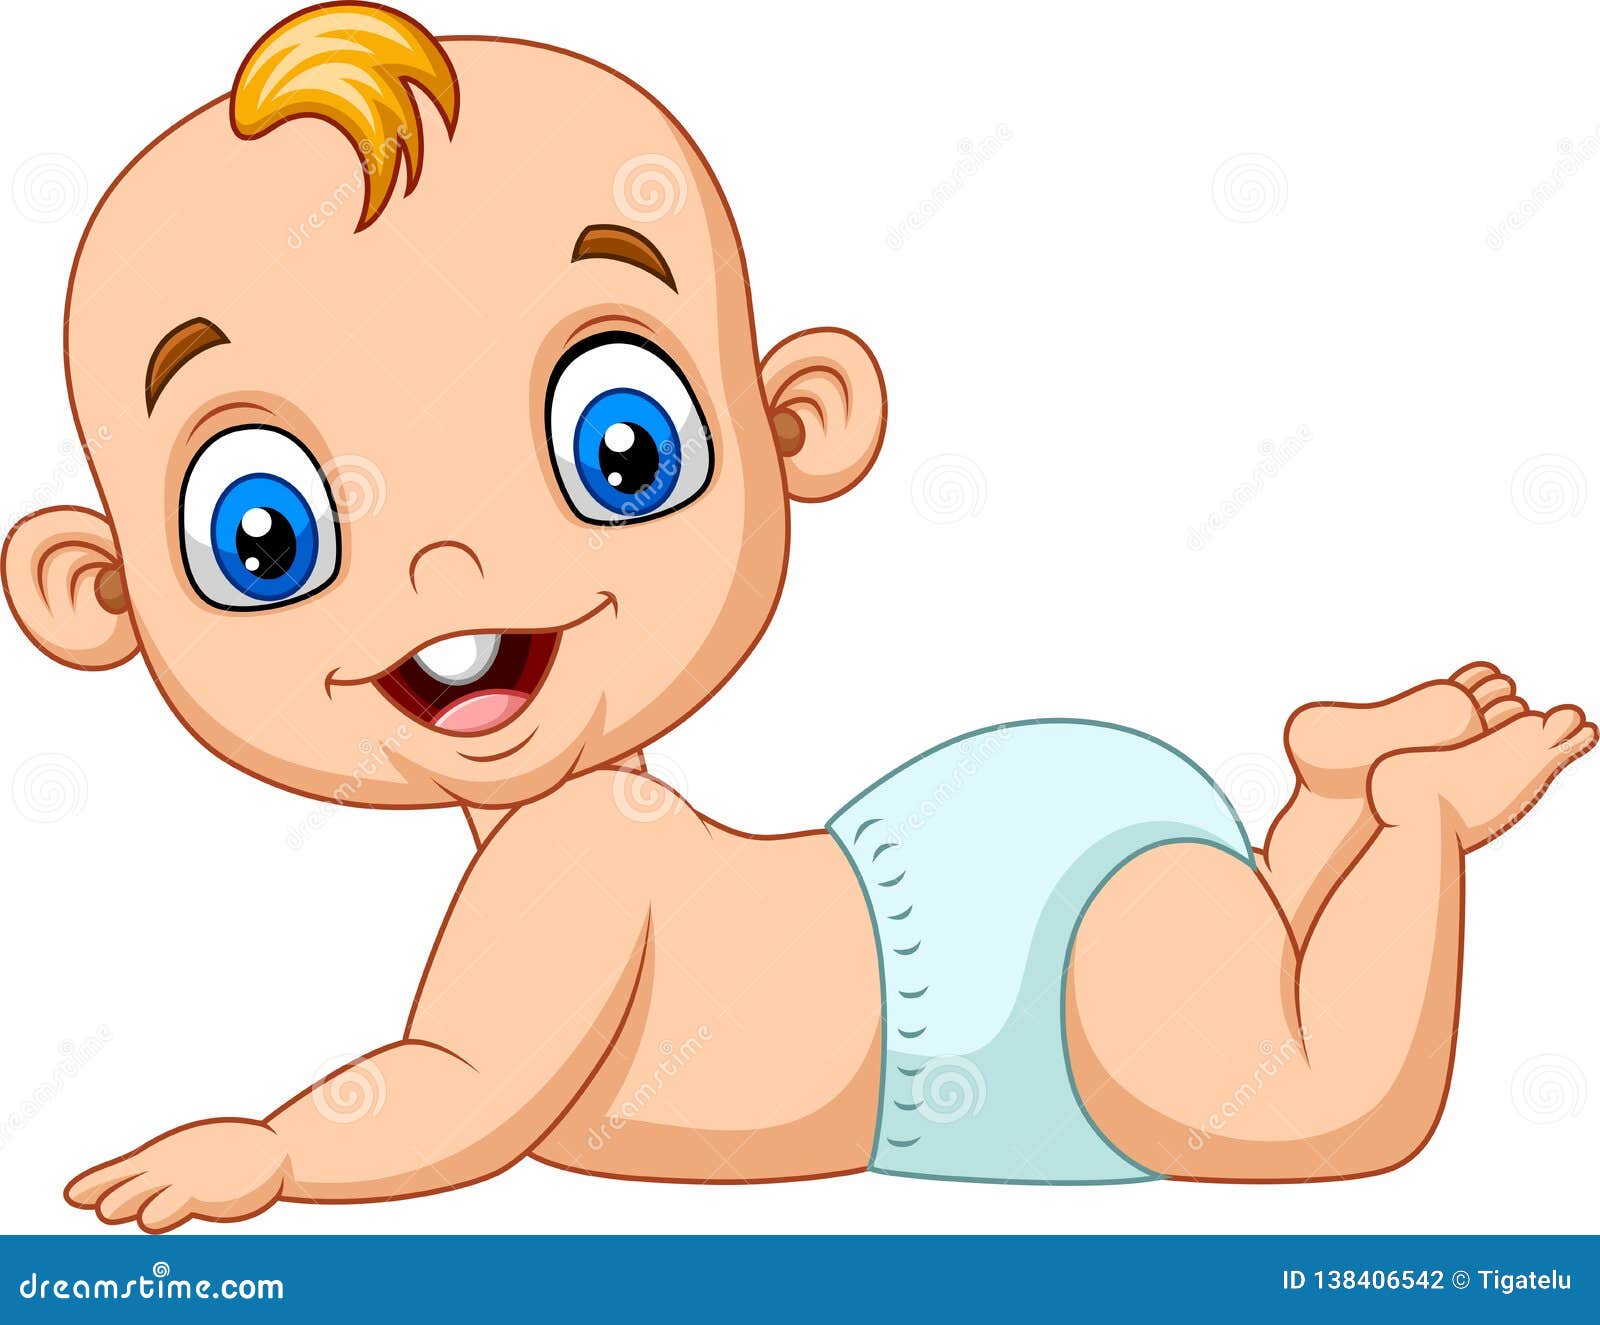 Cartoon Happy Baby Learn To Crawl Stock Vector - Illustration of female,  lying: 138406542